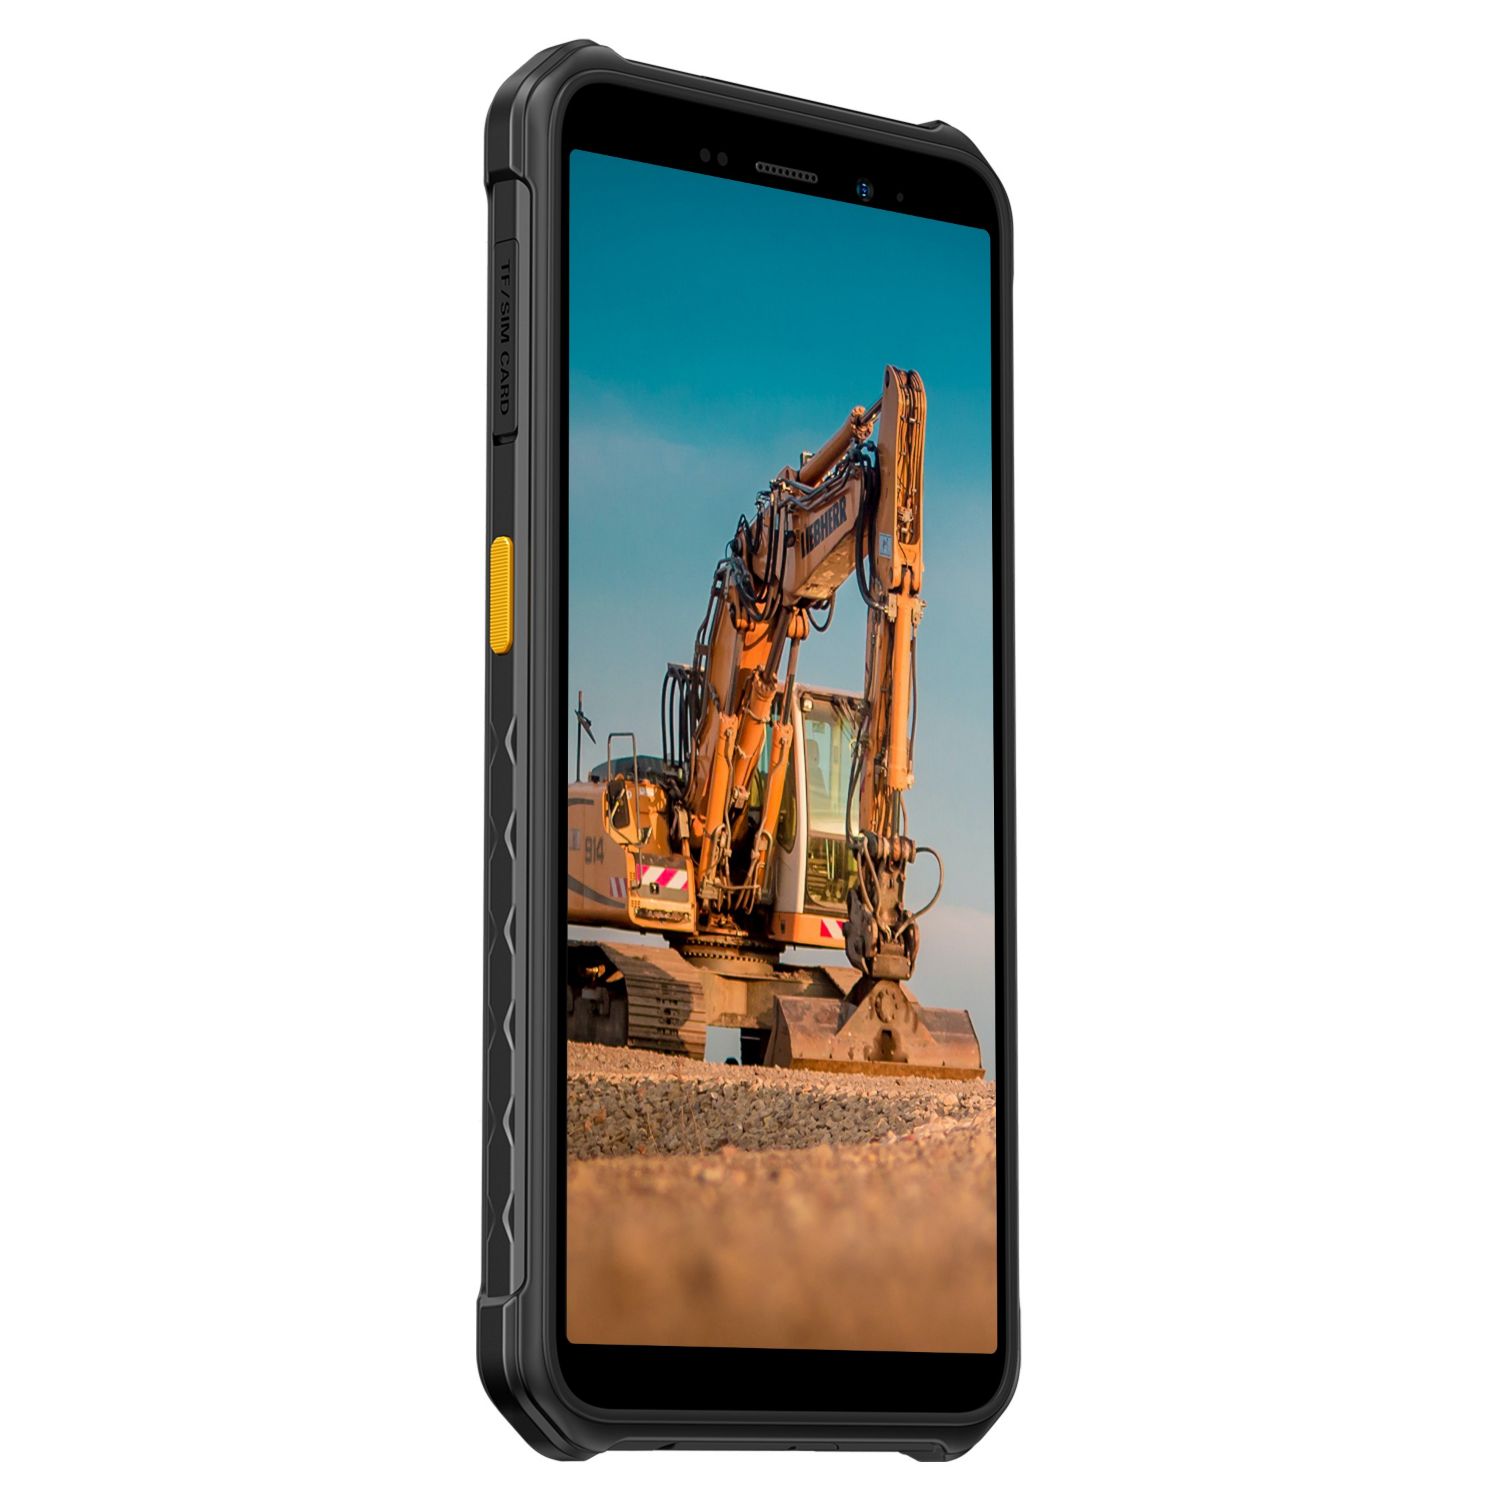 ULEARX12B - Smartphone Ulefone X12 5.45